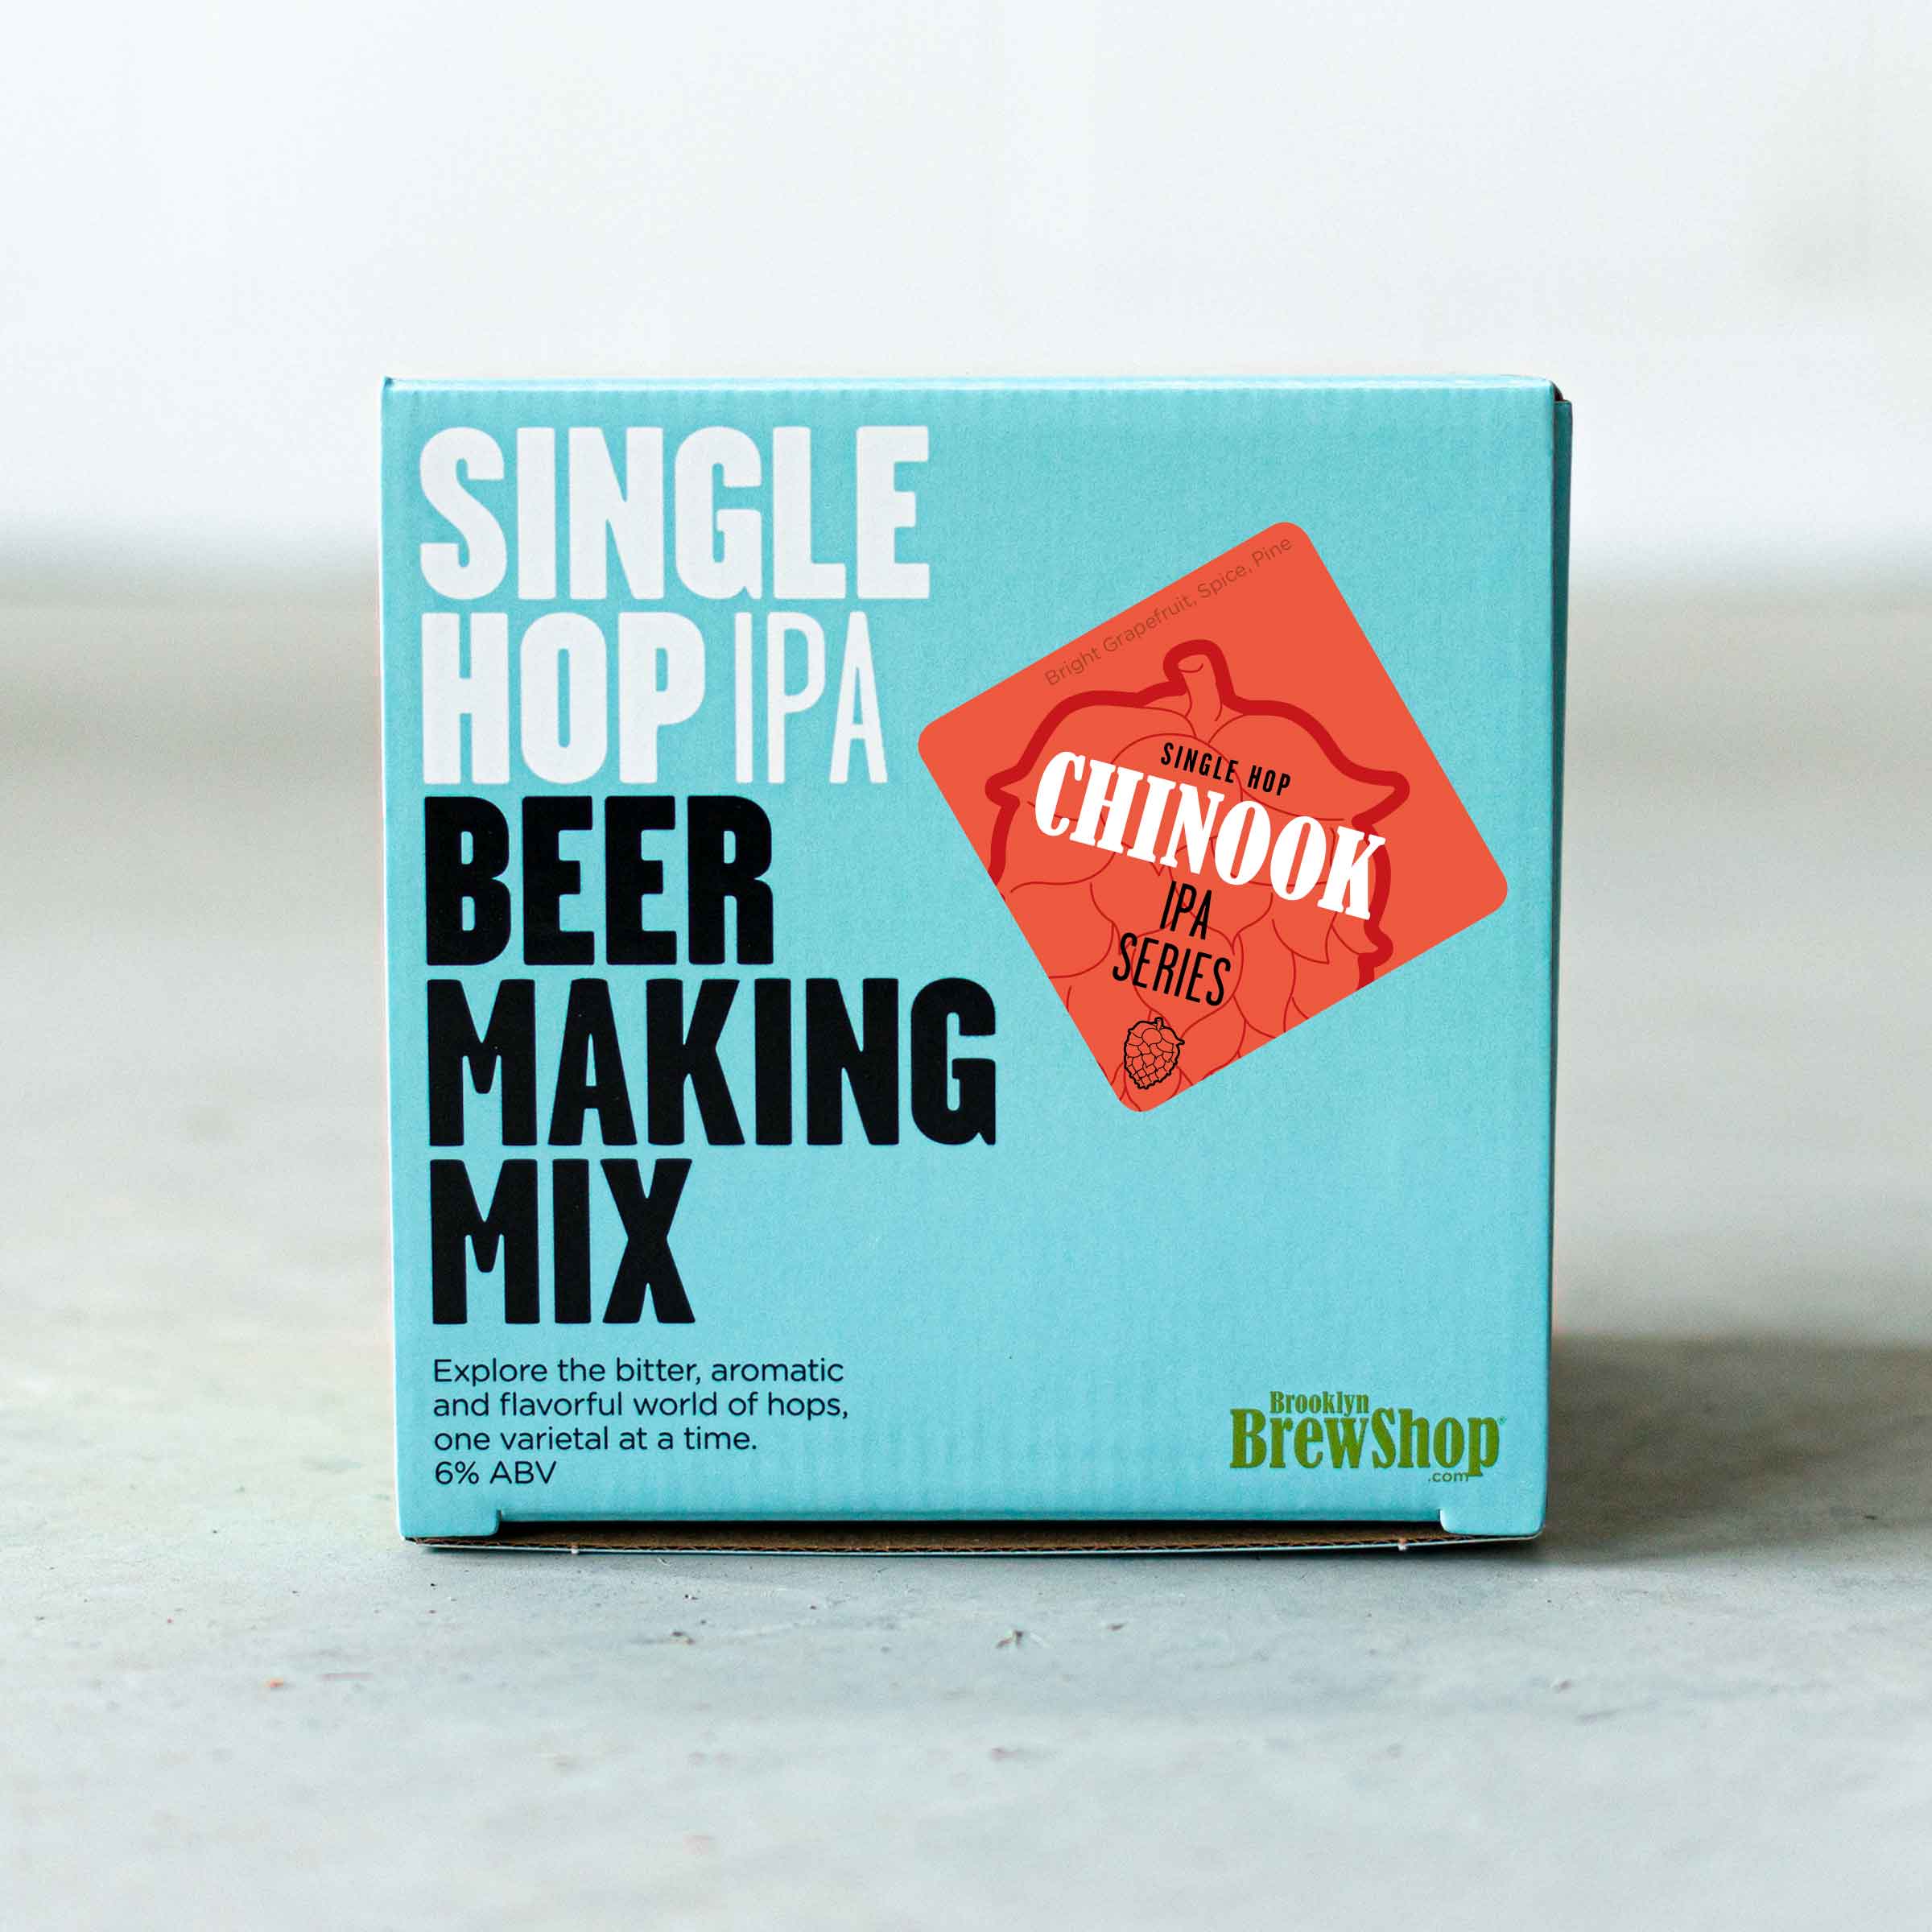 Image of Chinook Single Hop IPA: Beer Making Mix